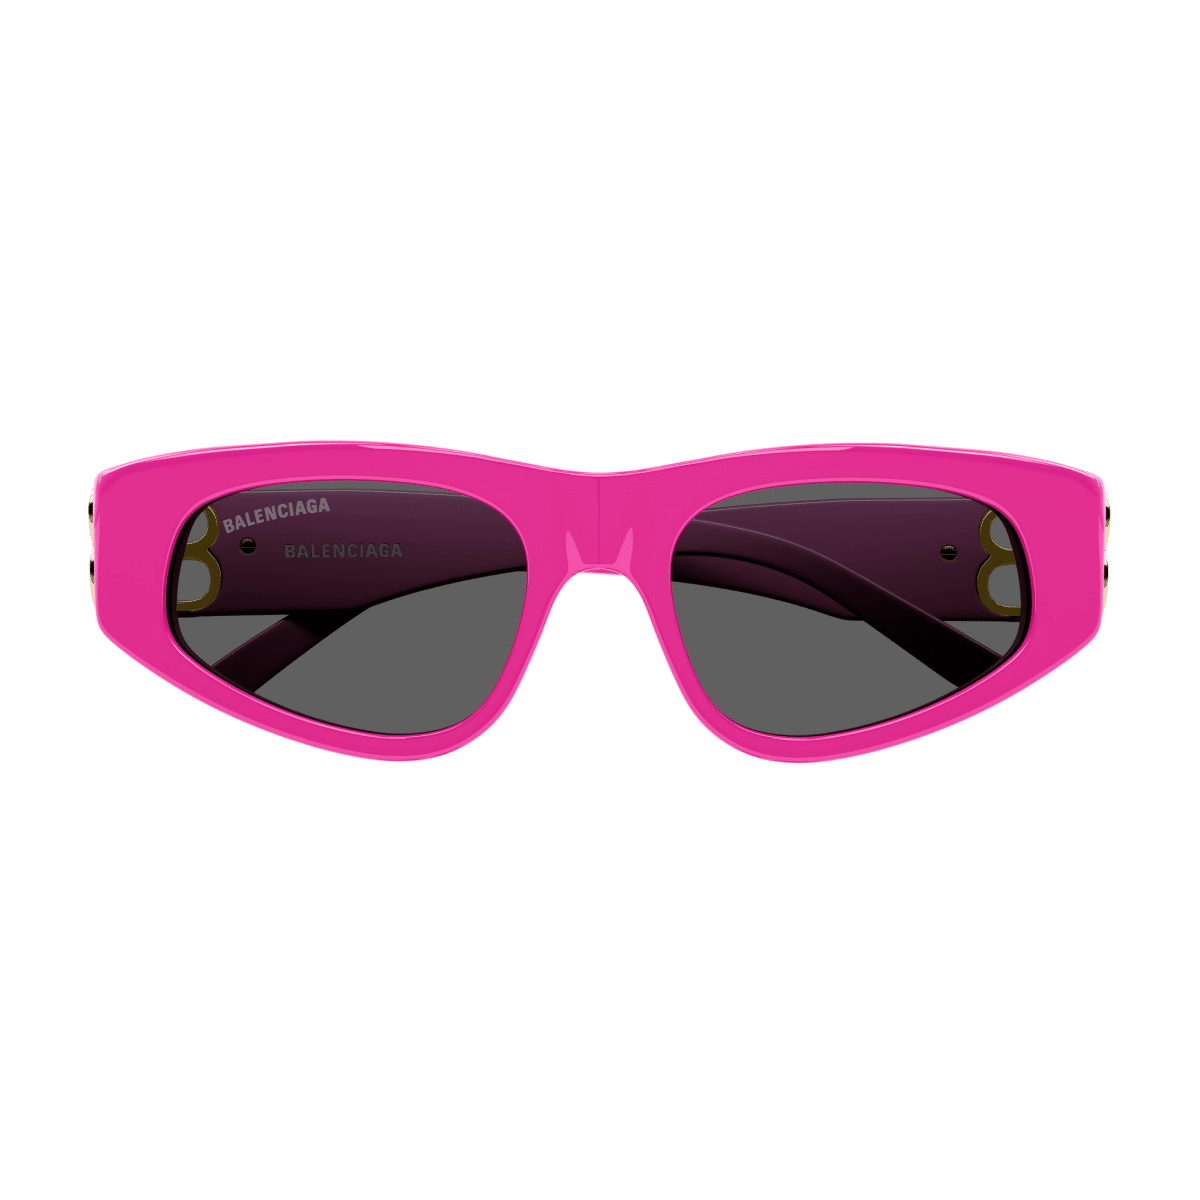 Balenciaga Sunglasses | Free US Shipping | Edward Beiner